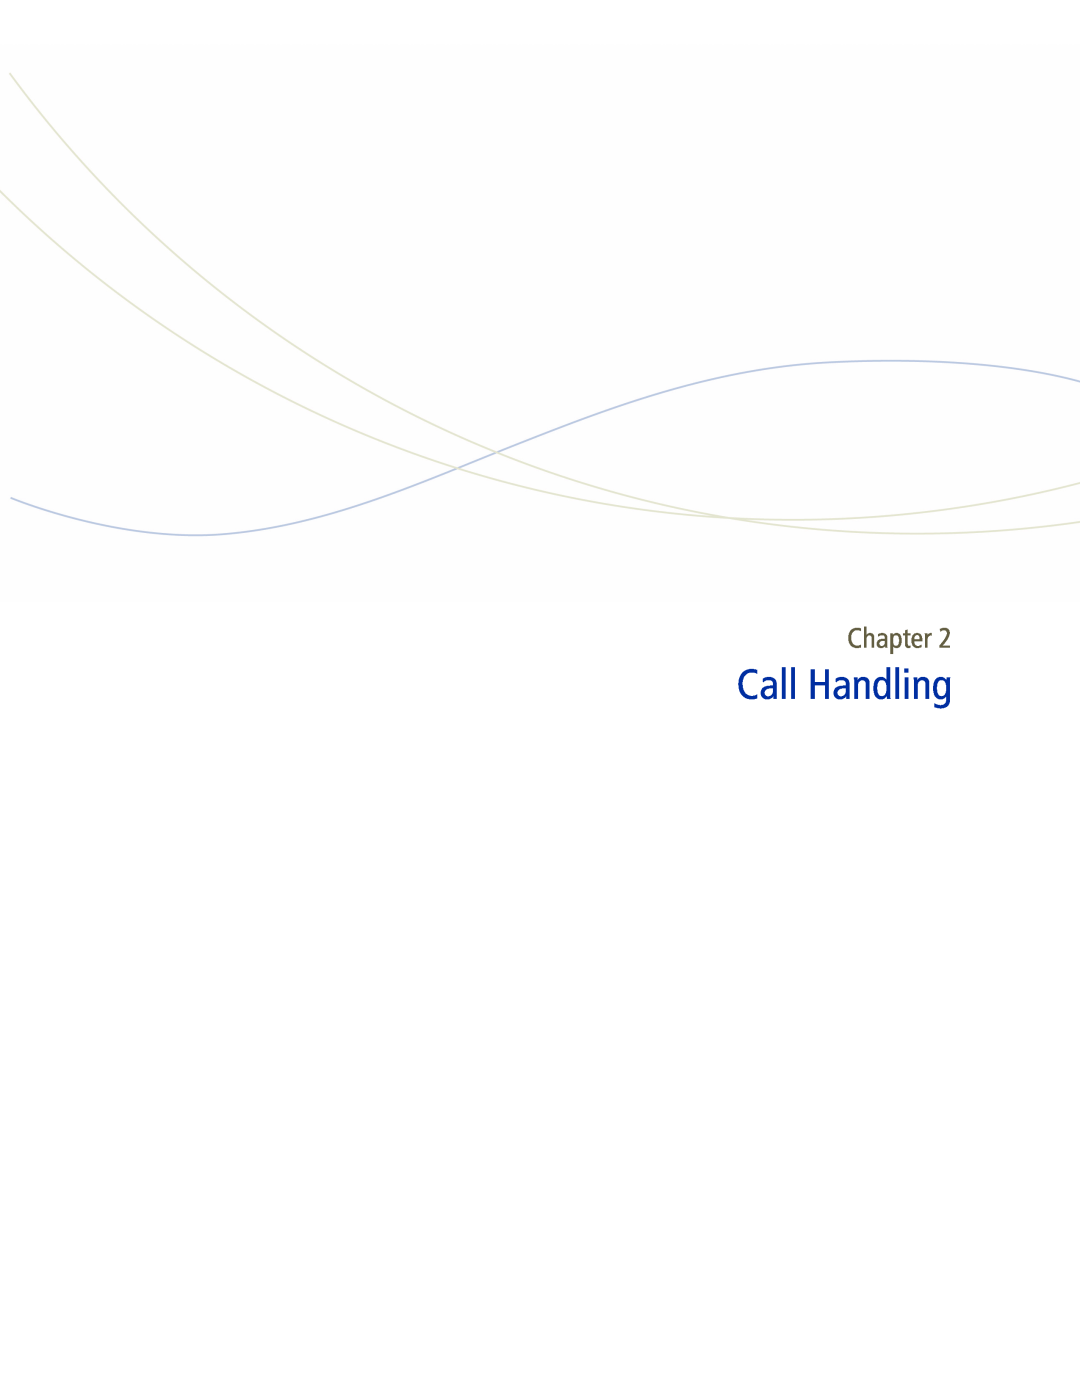 Mitel 5540 manual Call Handling, Chapter 